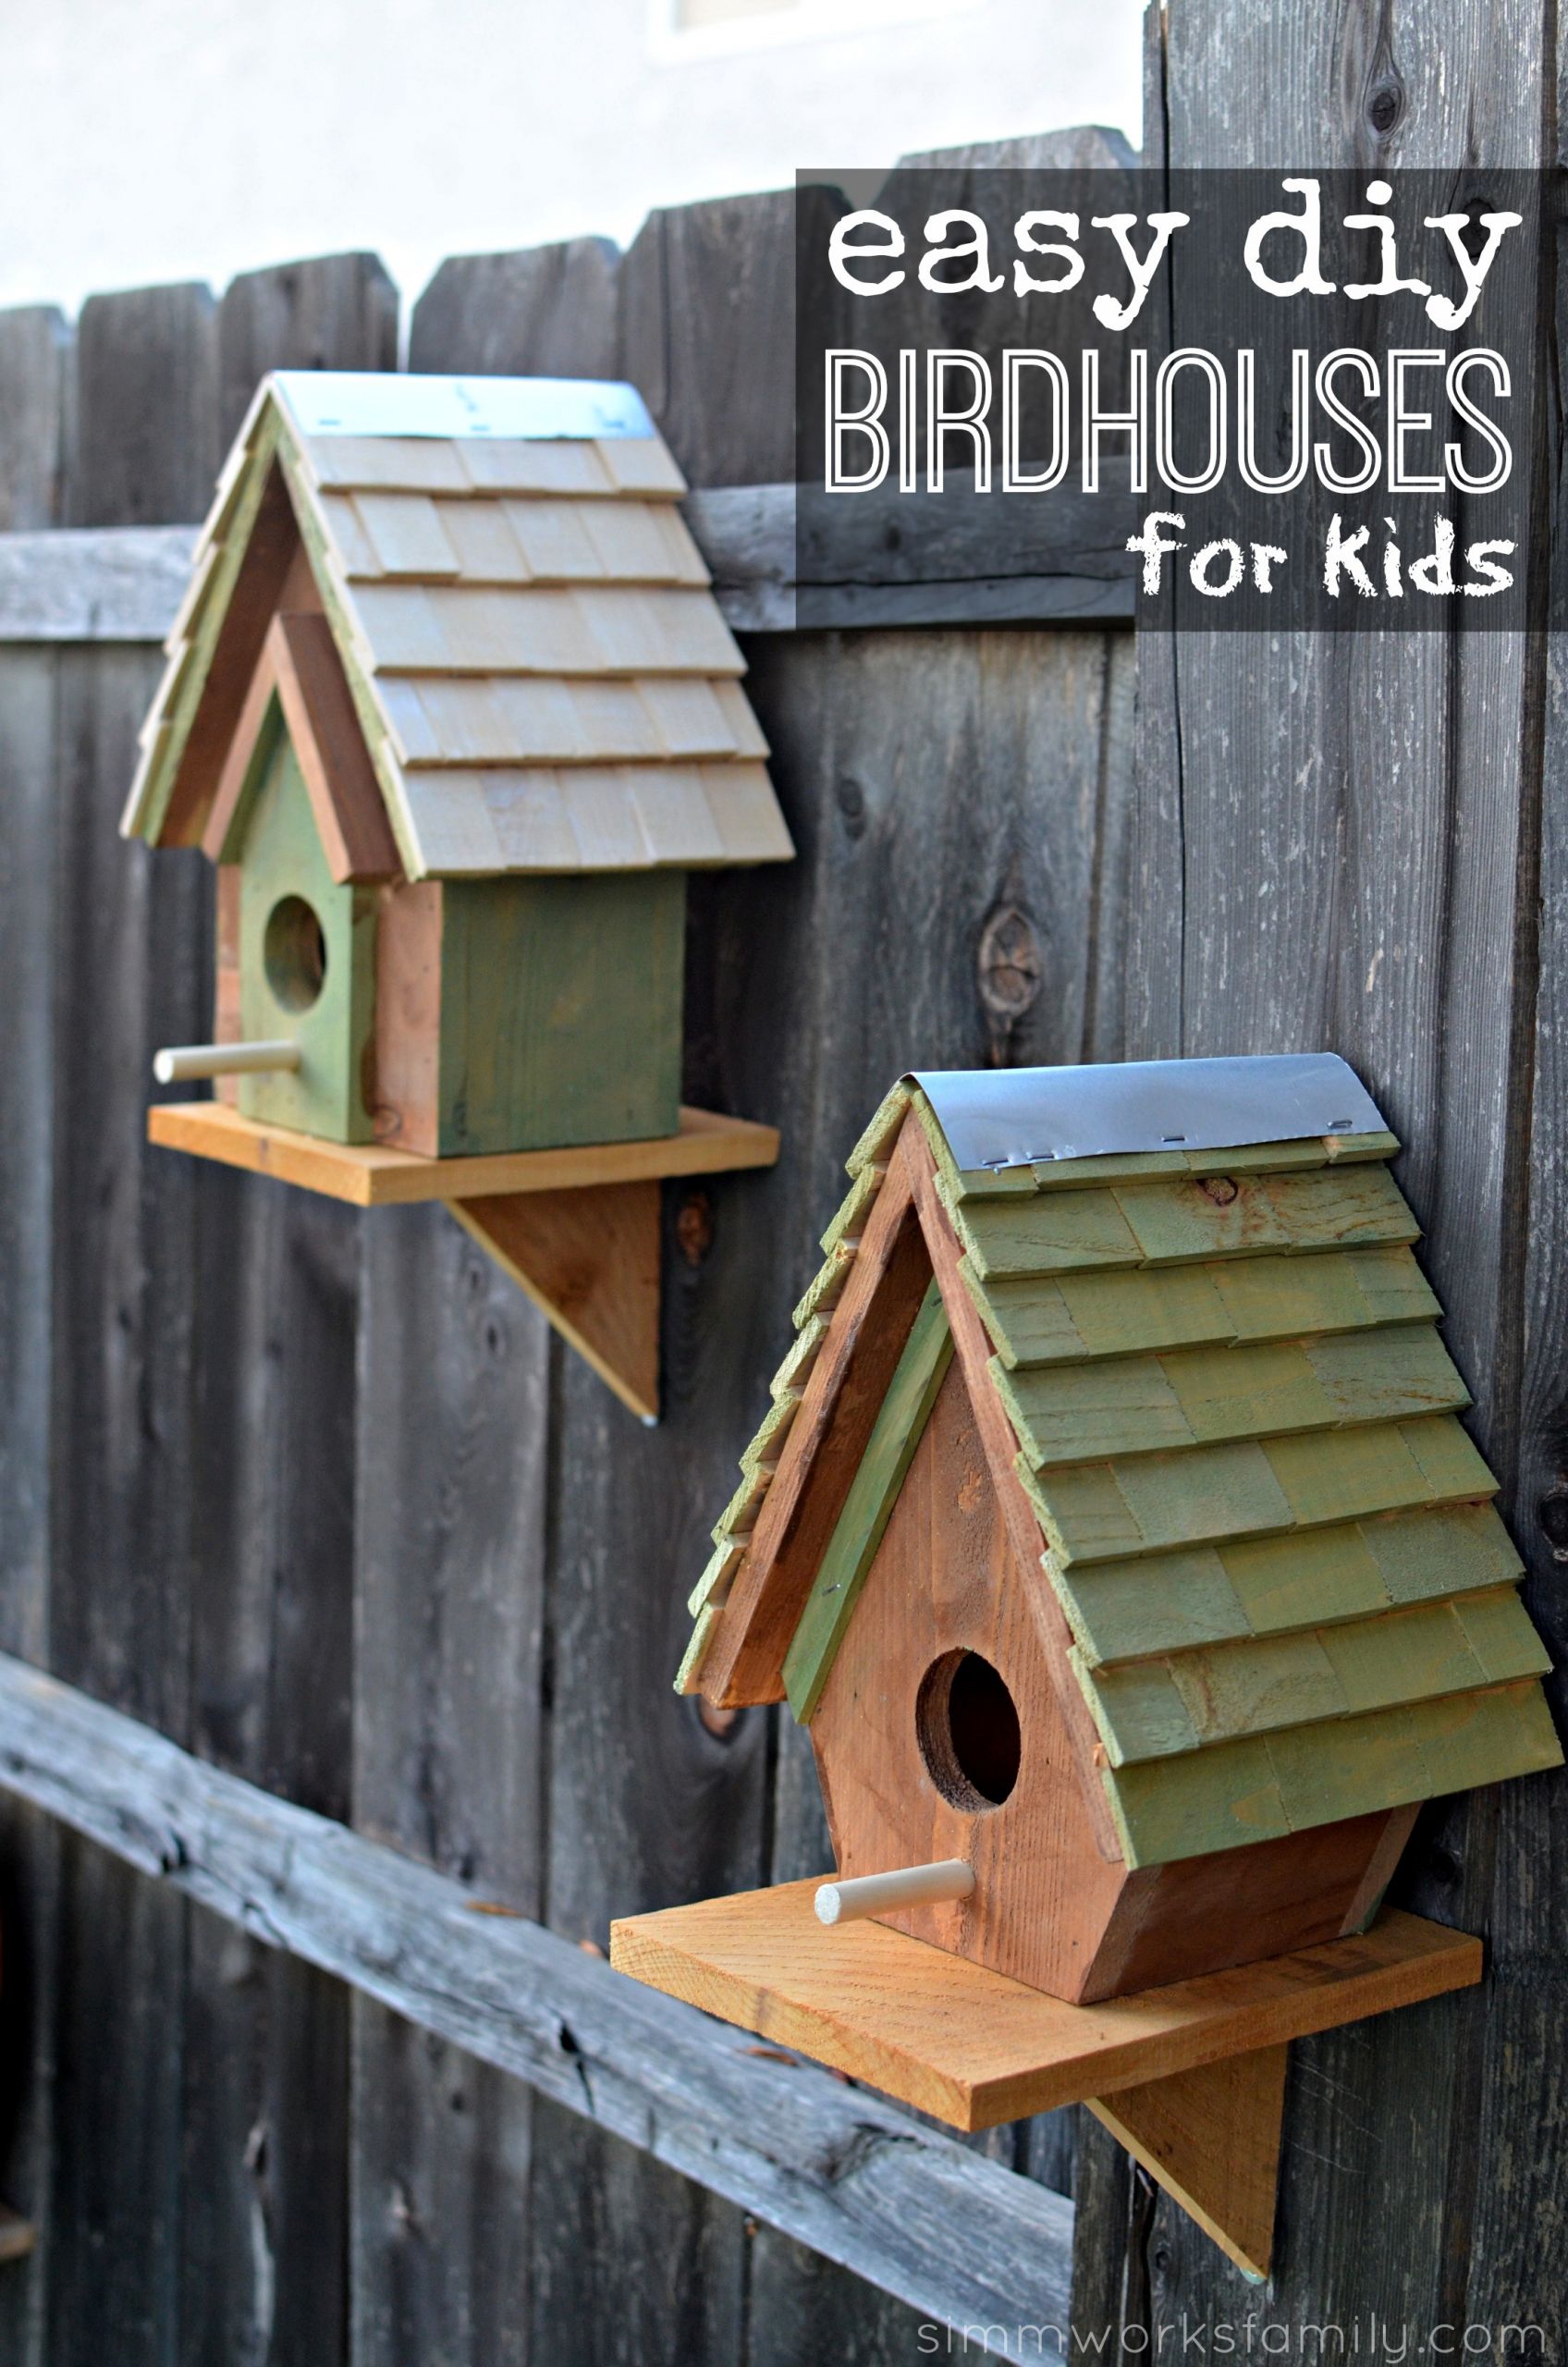 DIY Bird House Plans
 DIY Birdhouses Turning Inspiration into Reality